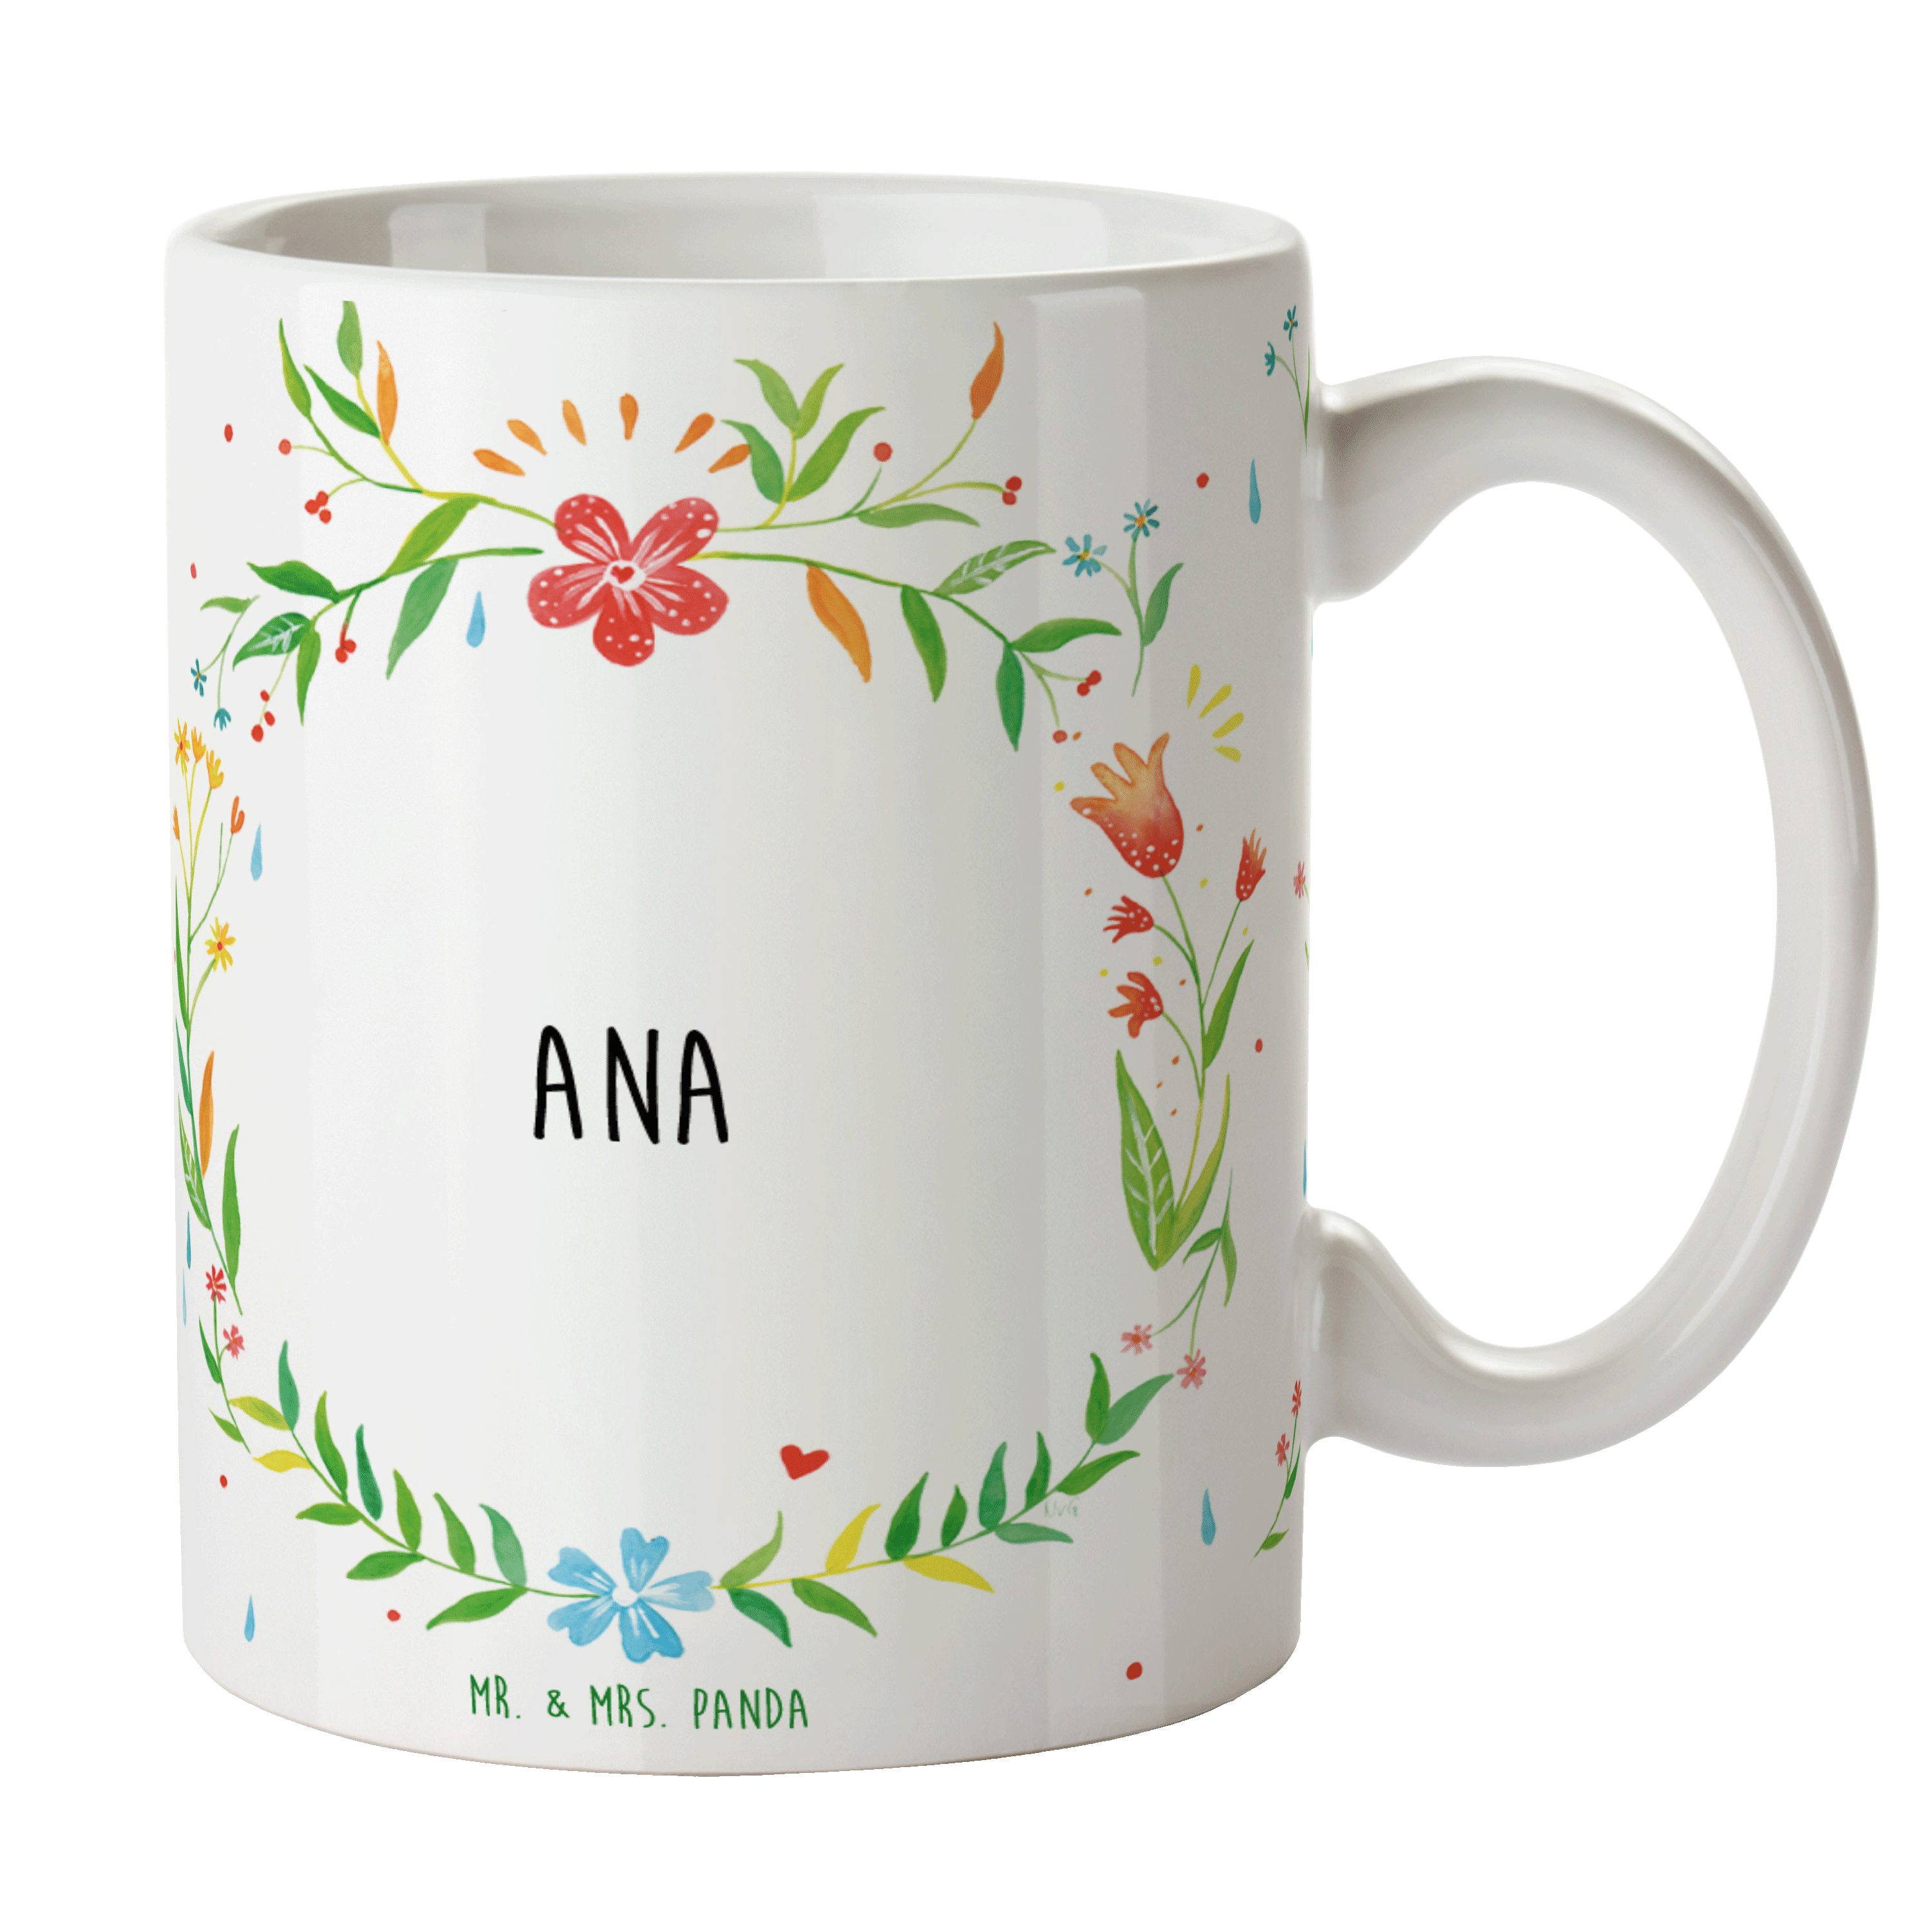 Mr. & Mrs. Panda Tasse Ana - Geschenk, Büro Tasse, Kaffeetasse, Tasse Motive, Keramiktasse, Keramik